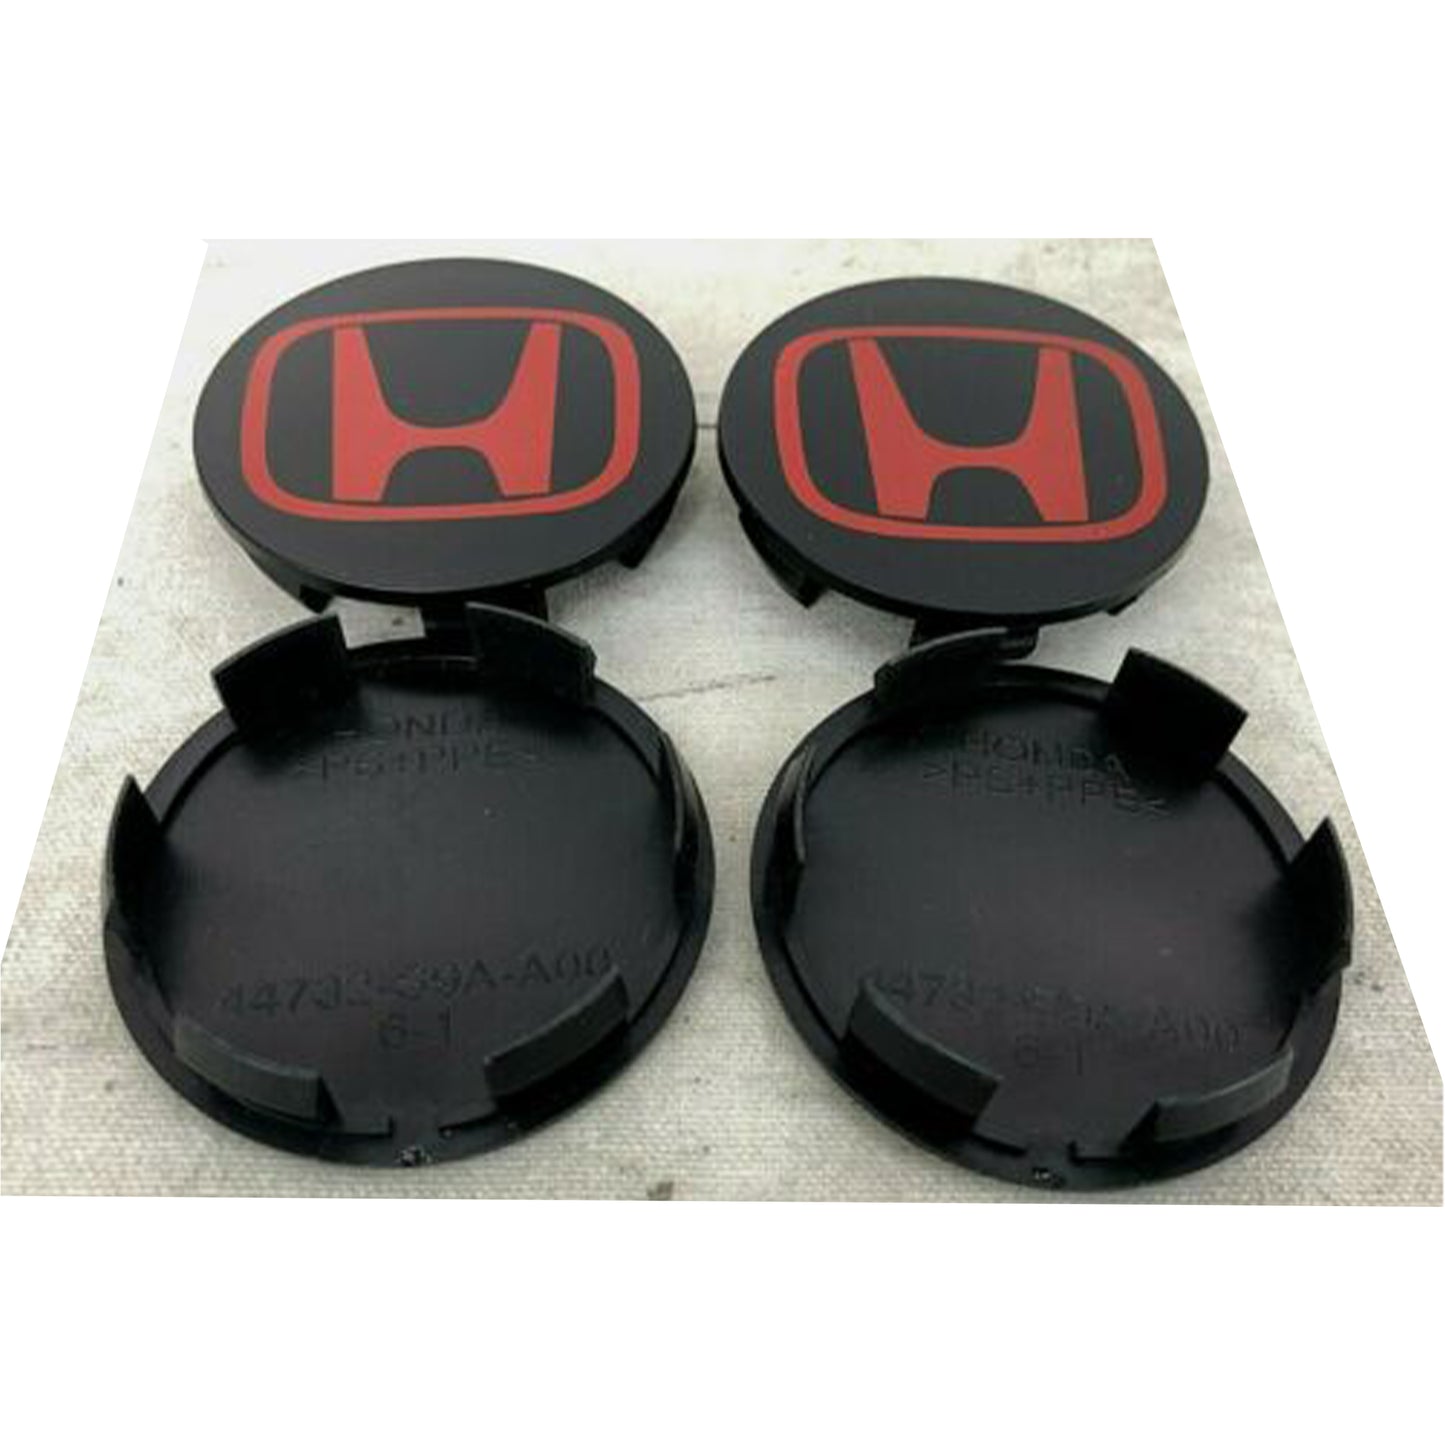 Honda Civic CRV Set of 4 Wheel Rim Center Caps Black/Red Logo 69MM/2.75'